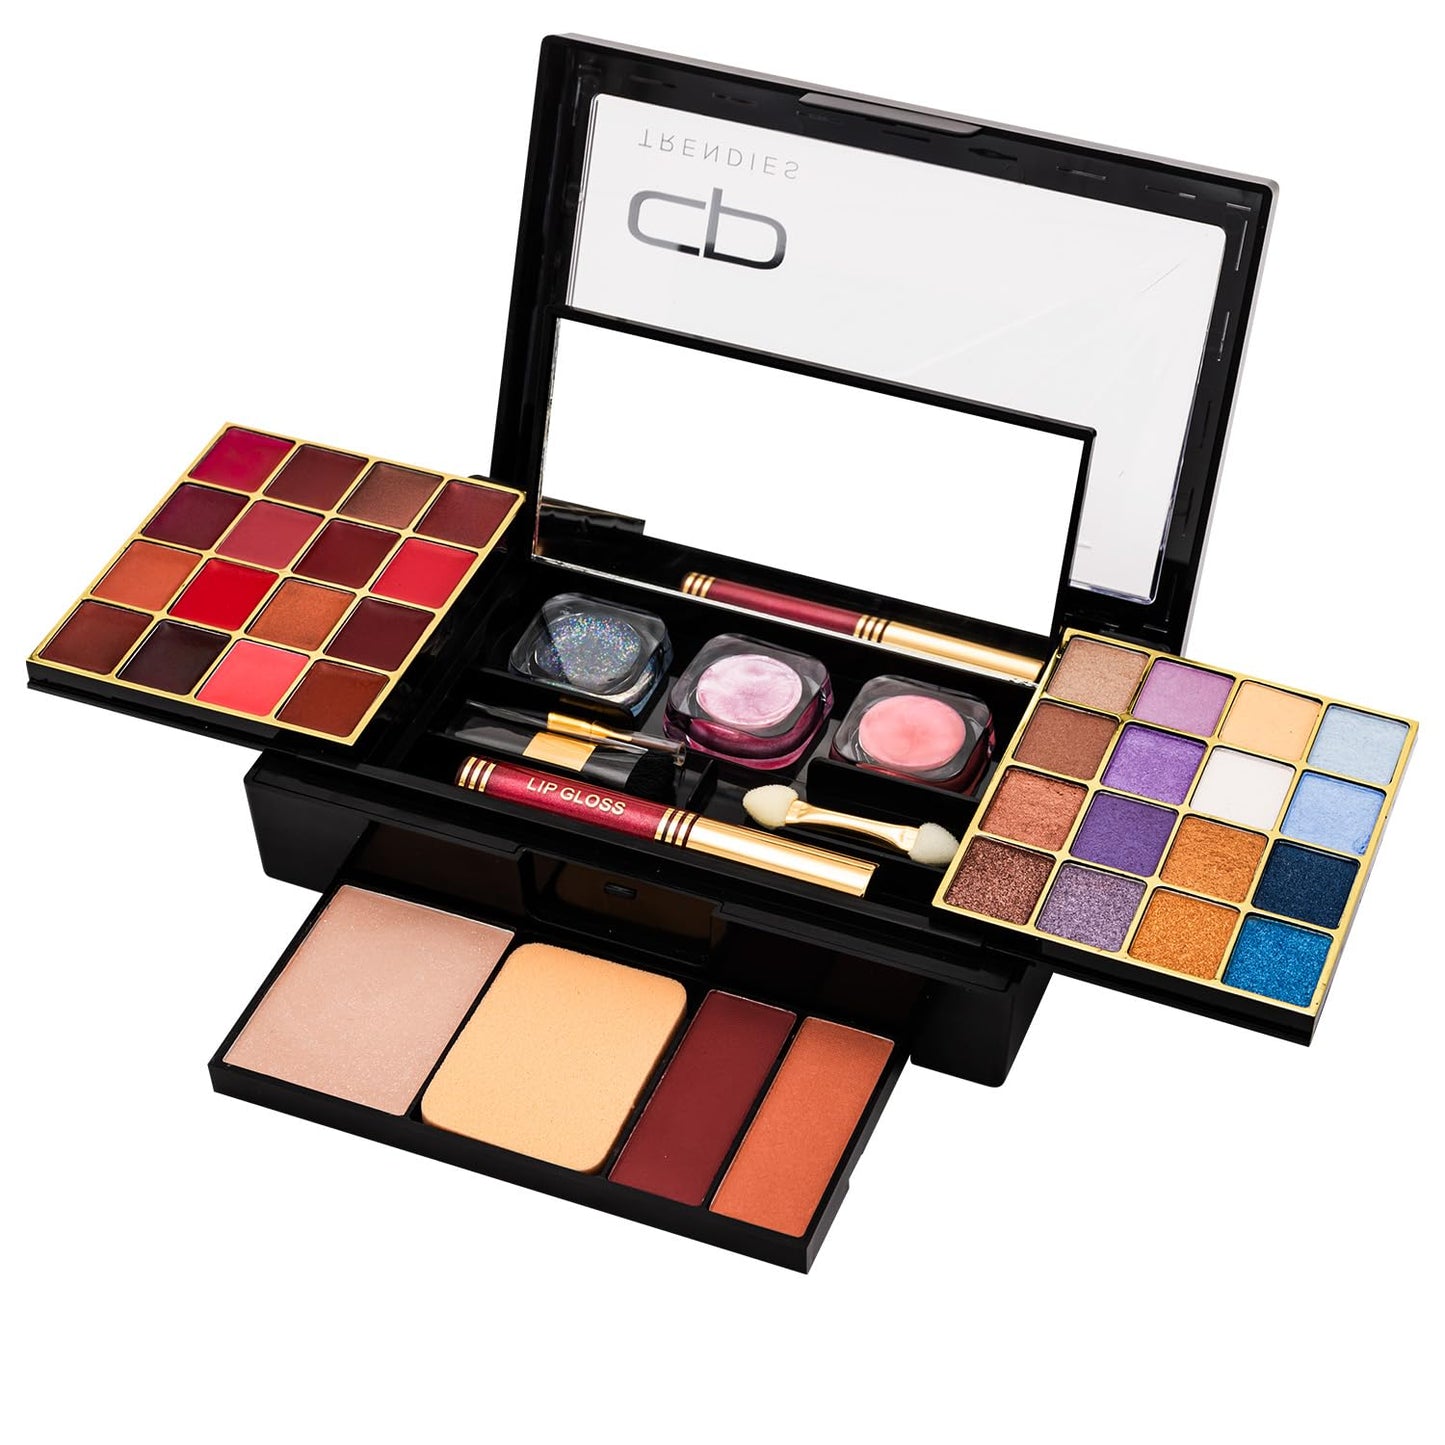 CP Trendies Makeup Kit 82 – ELEGANT - Ultimate Color - Gift Set for Women/Girls | All-in-one Makeup Kit